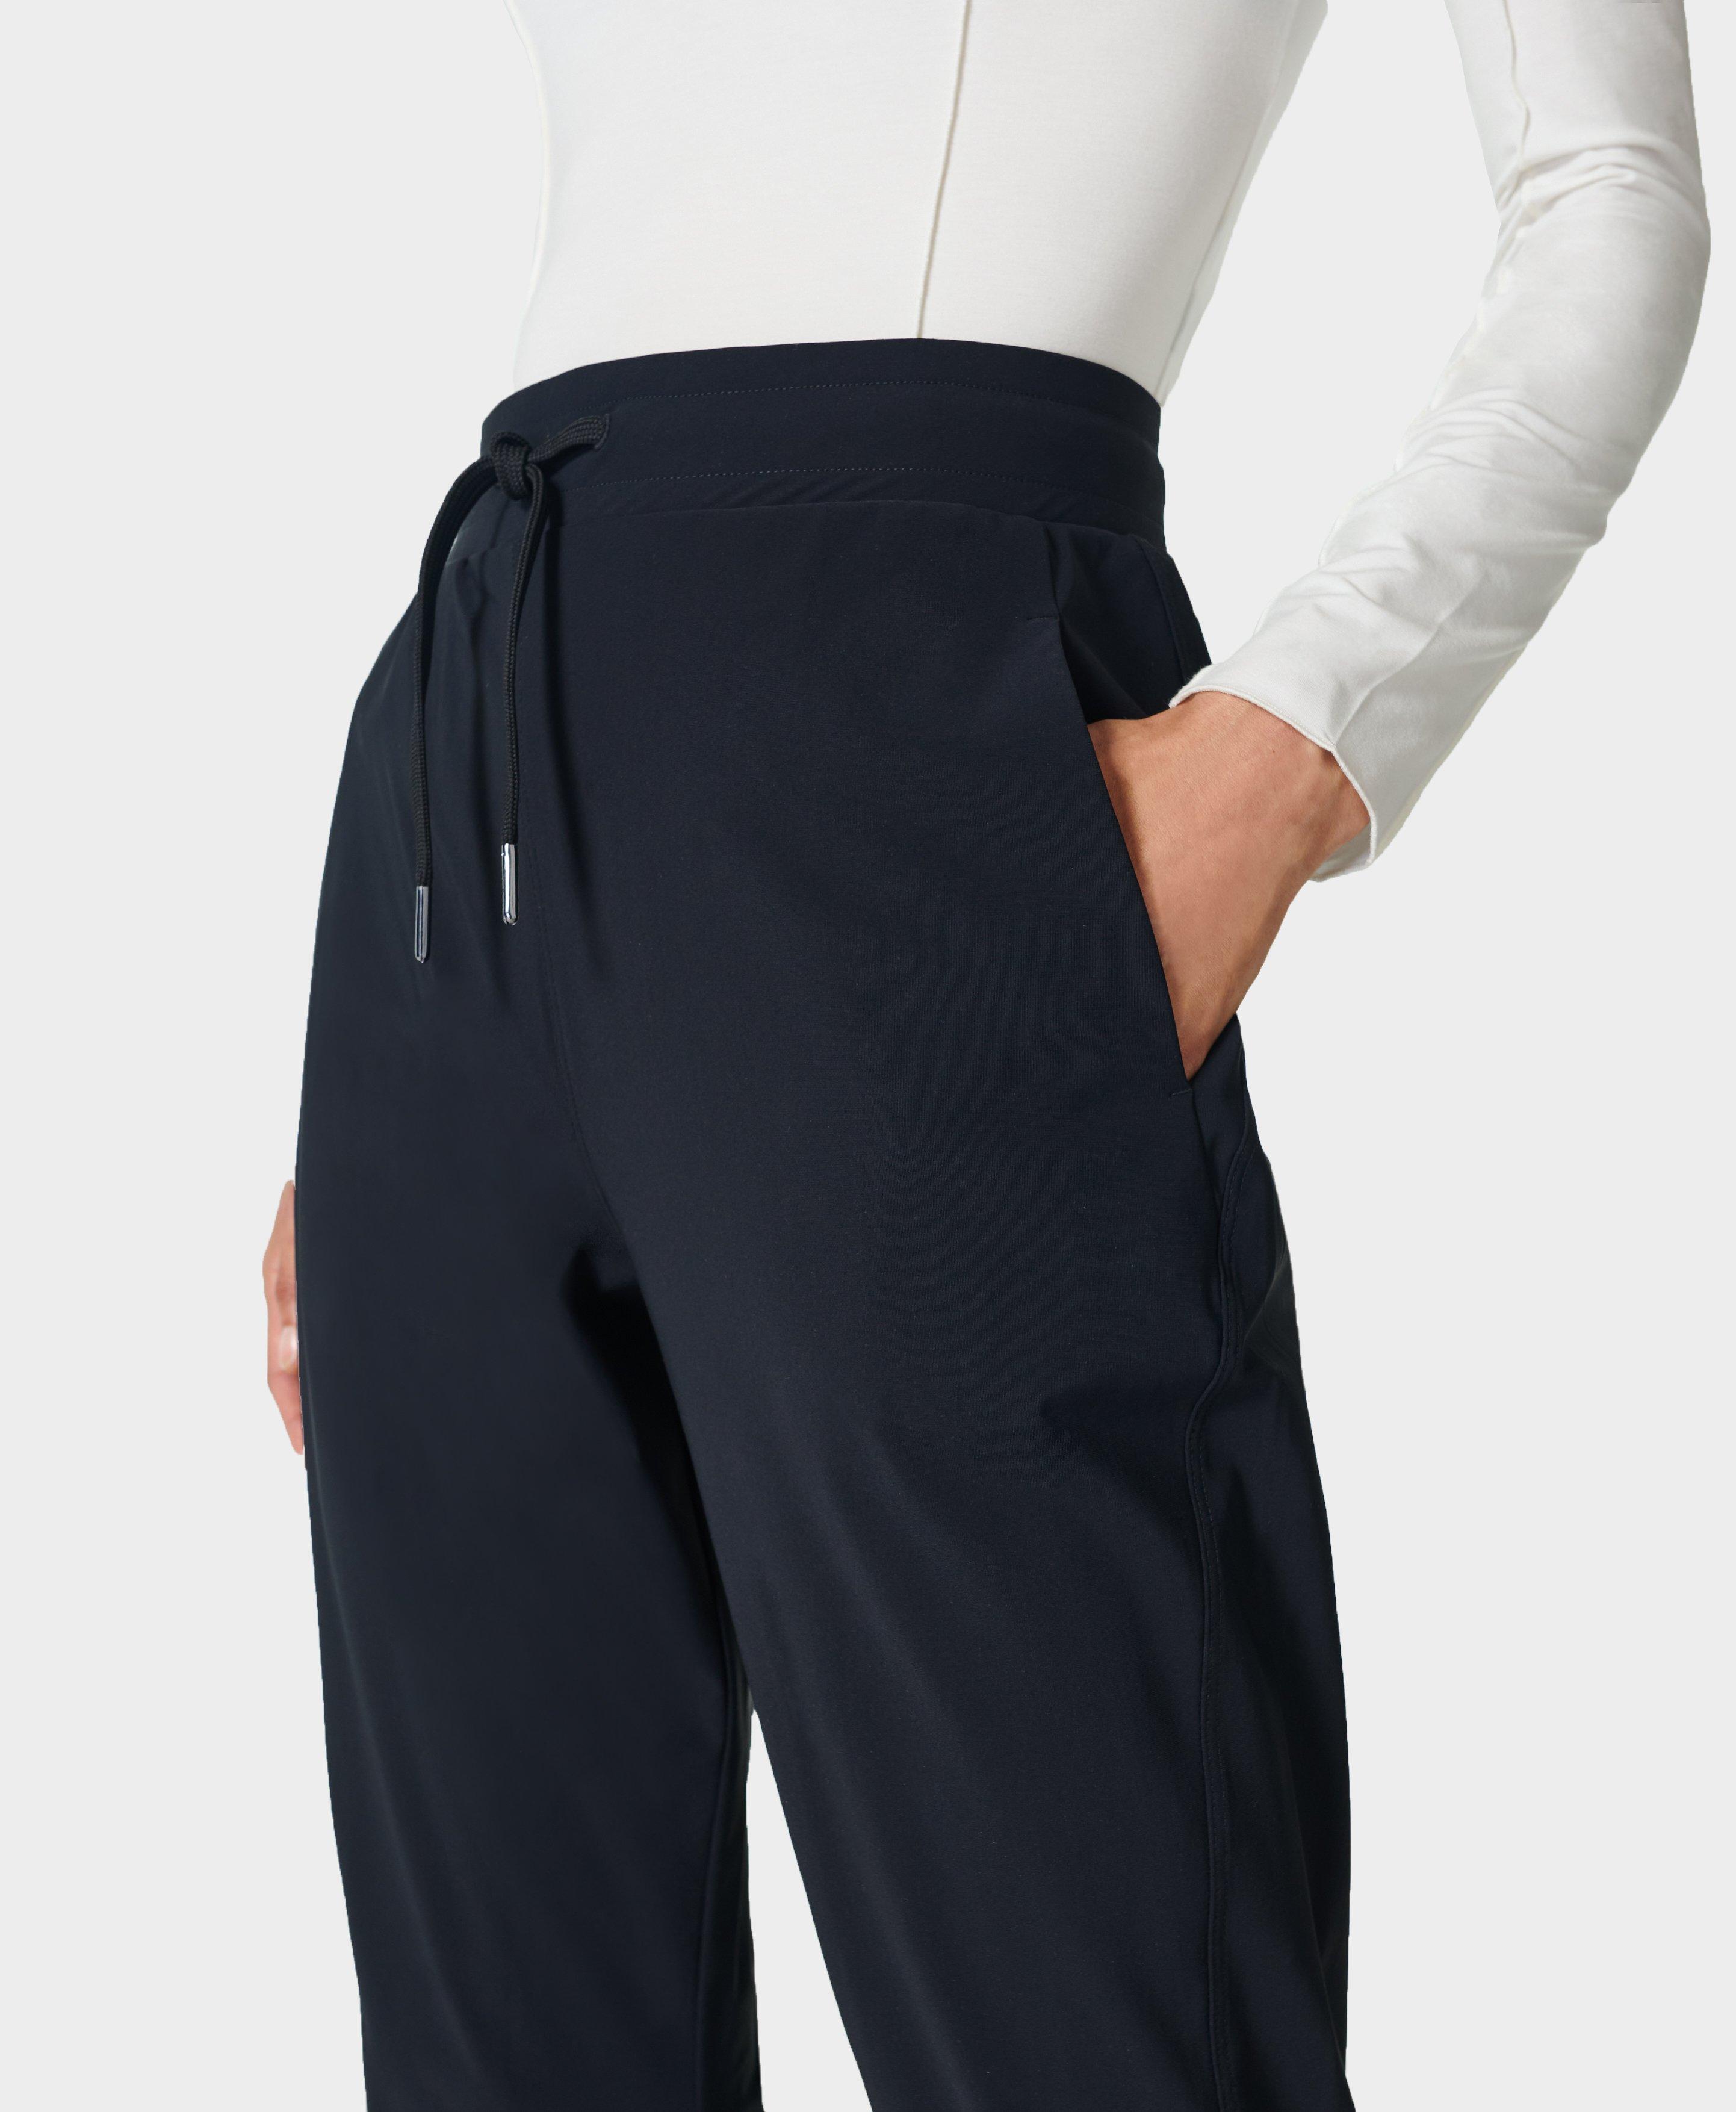 Winter Explorer Trouser - Black  Women's Trousers & Yoga Pants